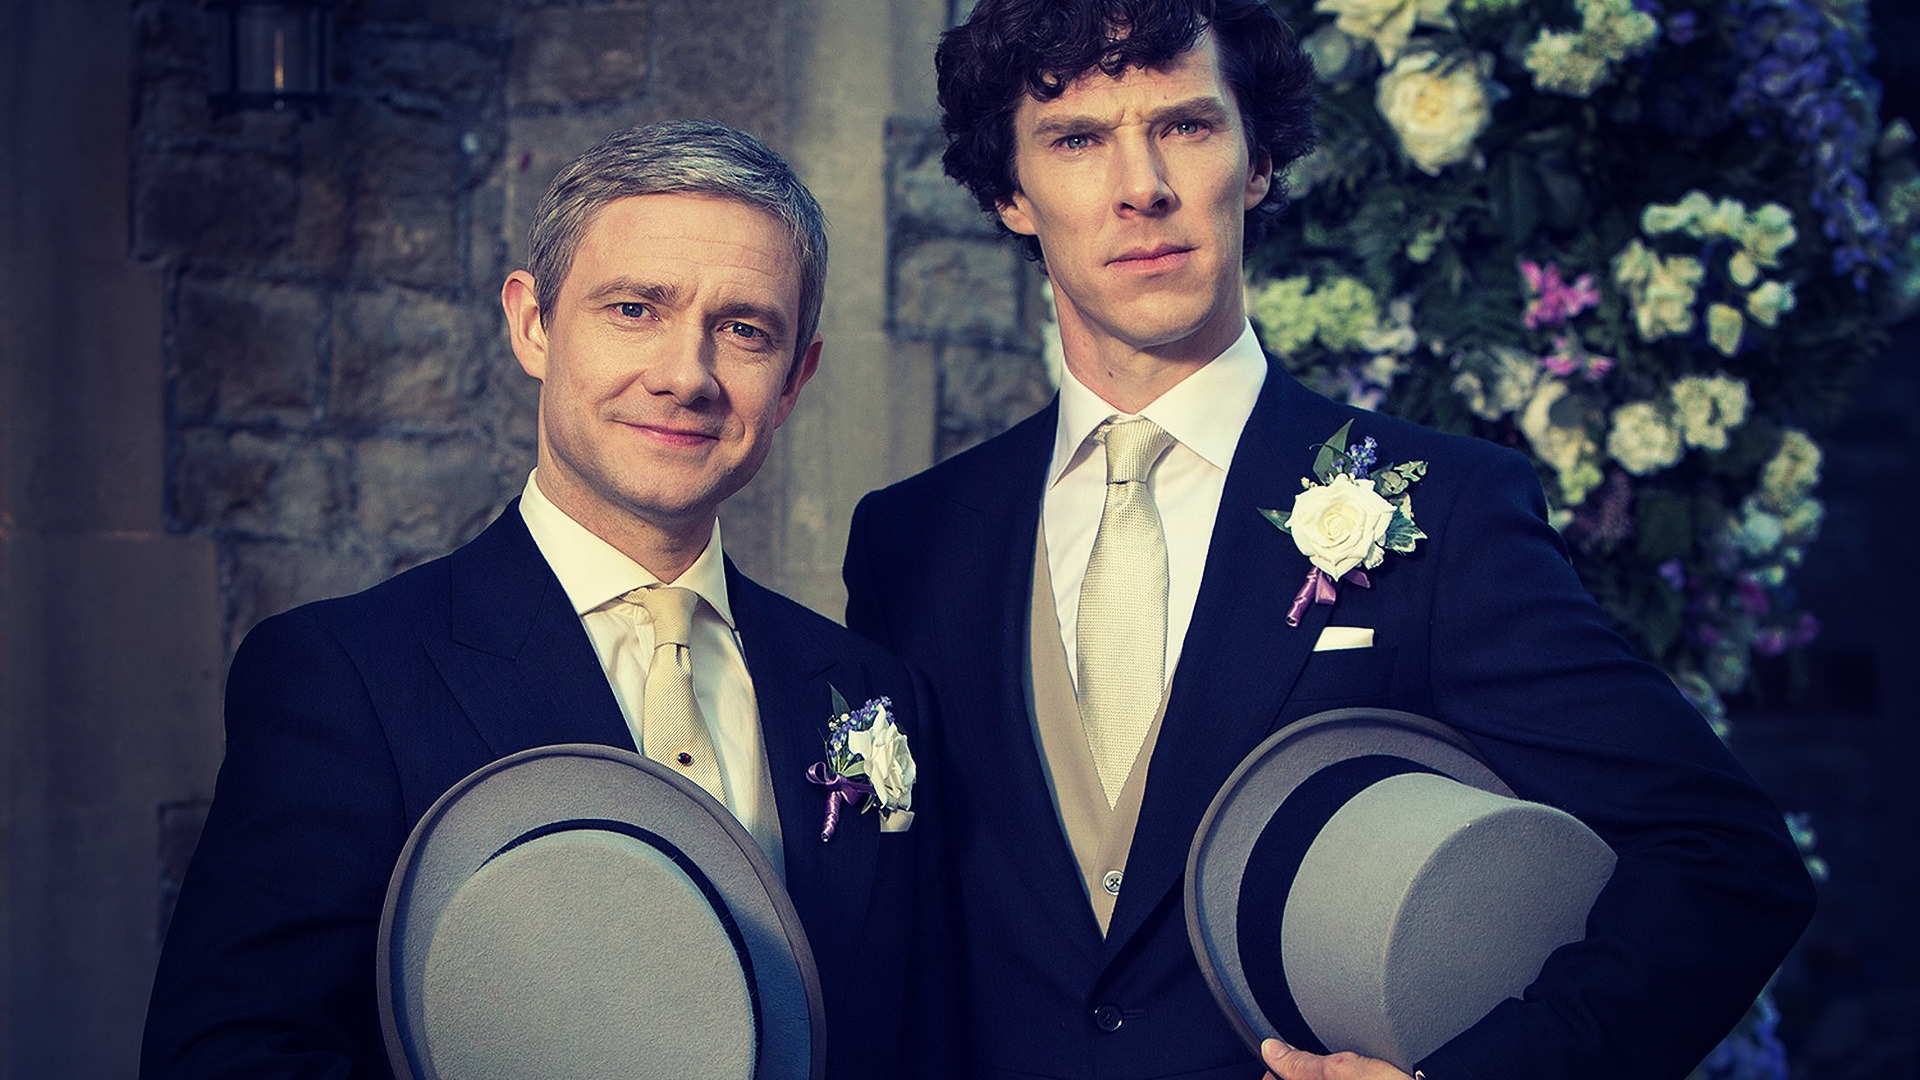 Sherlock at John Wedding for 1920 x 1080 HDTV 1080p resolution